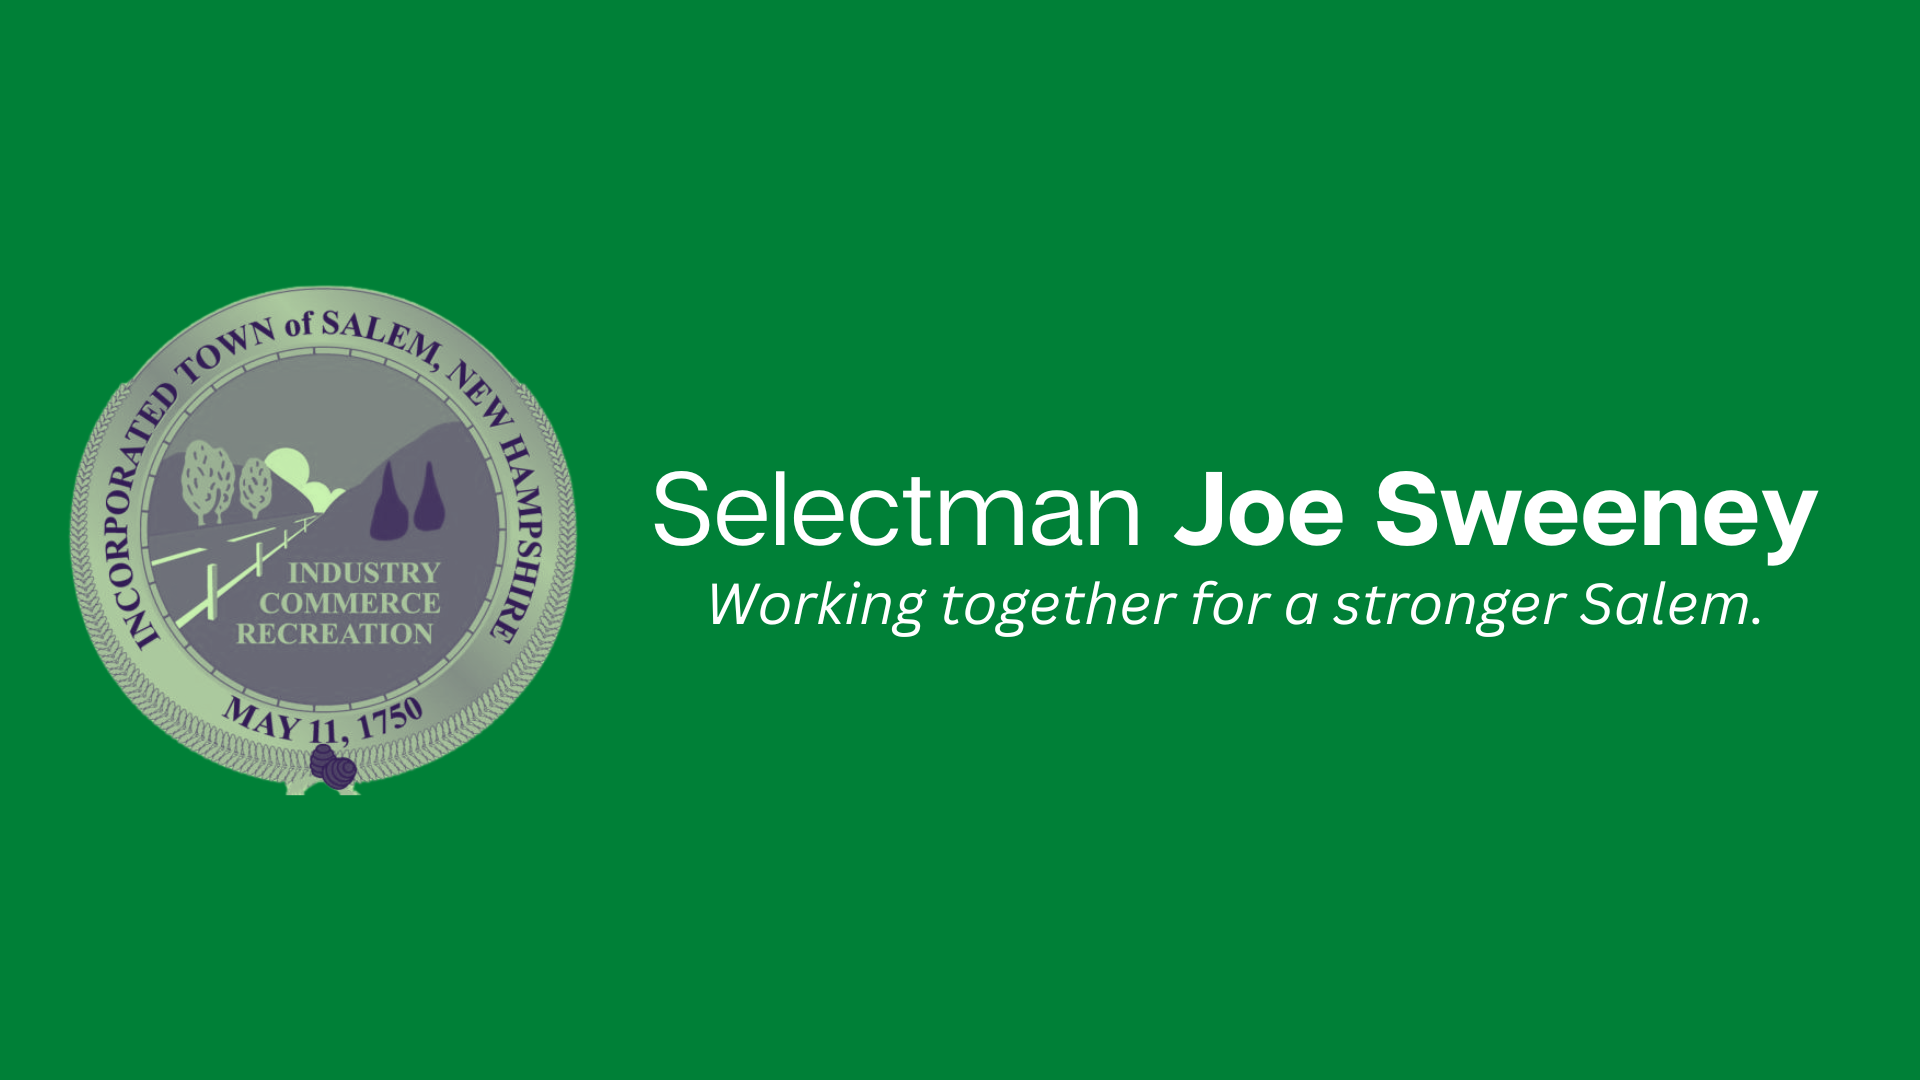 Sweeney Sworn In as Selectman